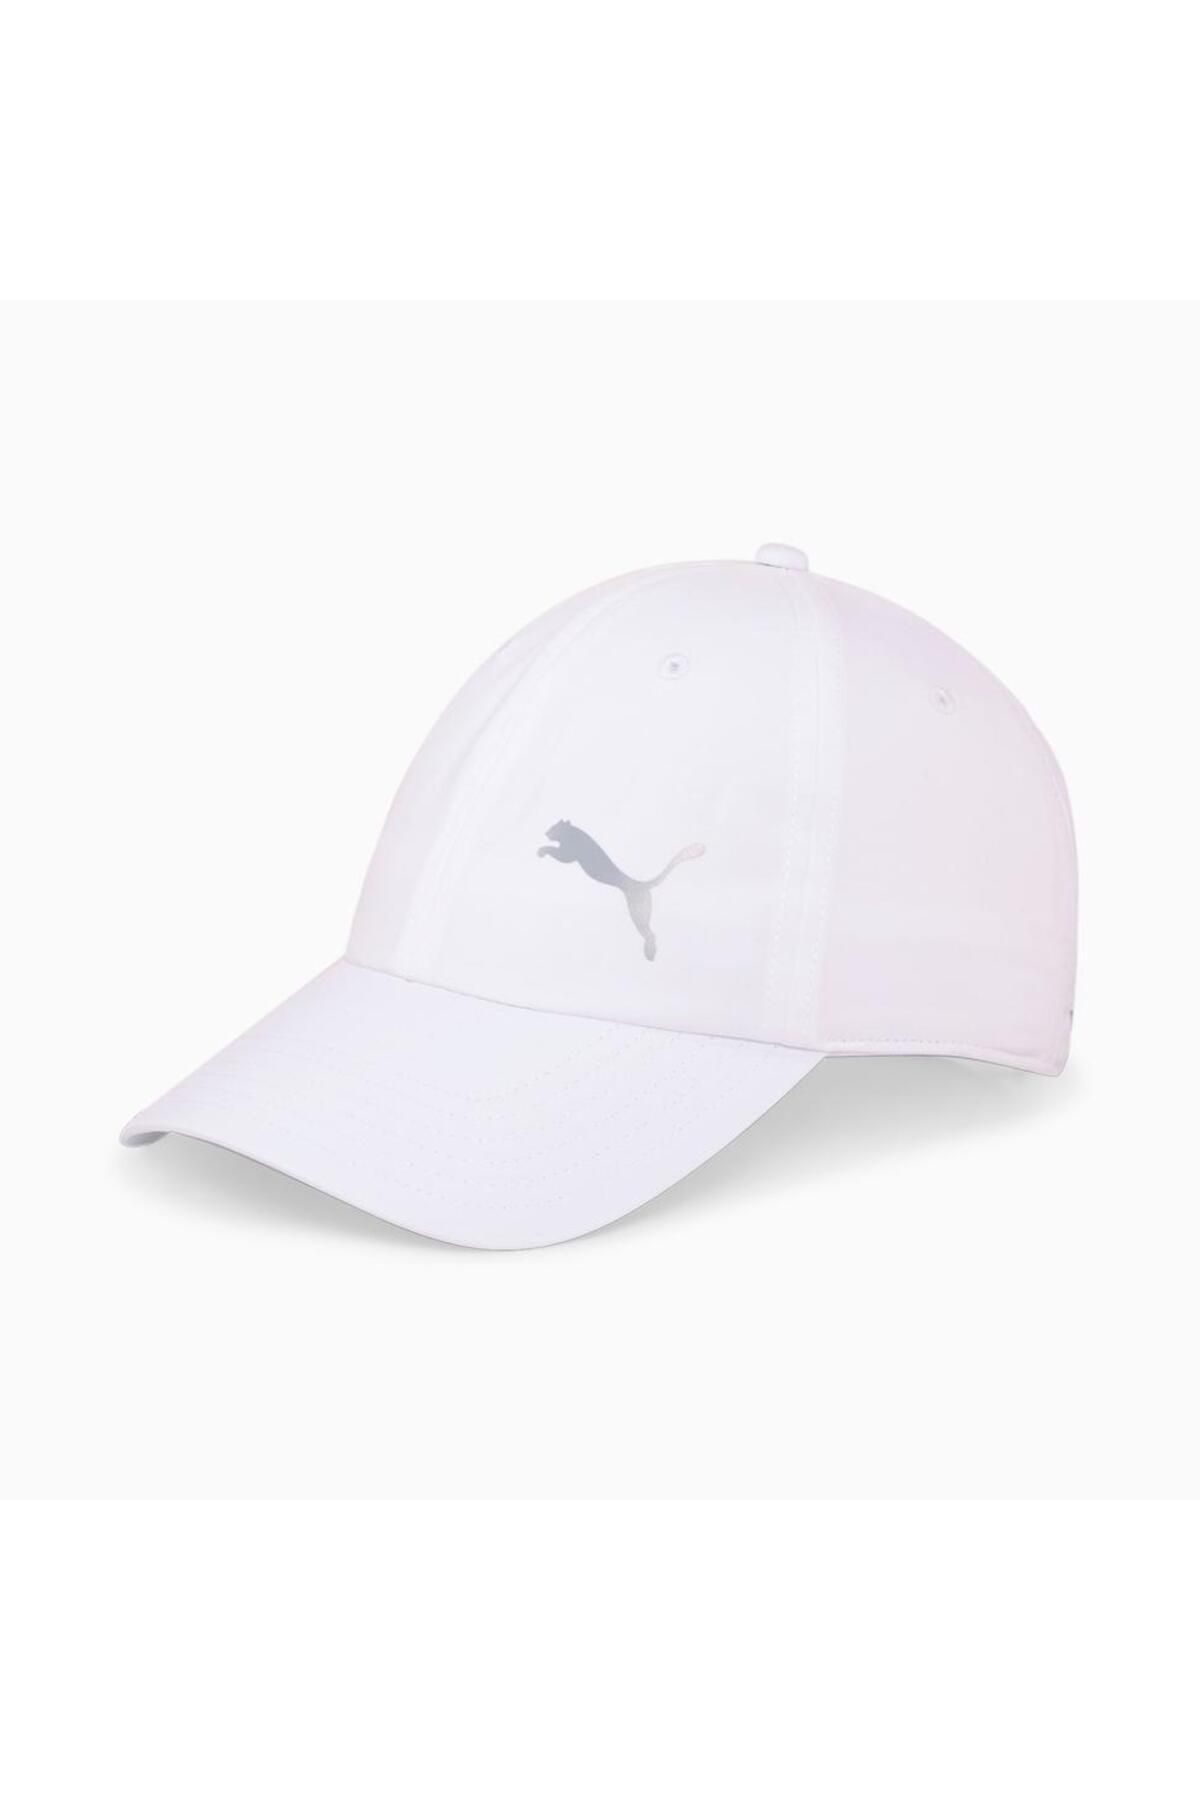 Puma 023711 02 Poly Cotton Cap, ADULT Şapka